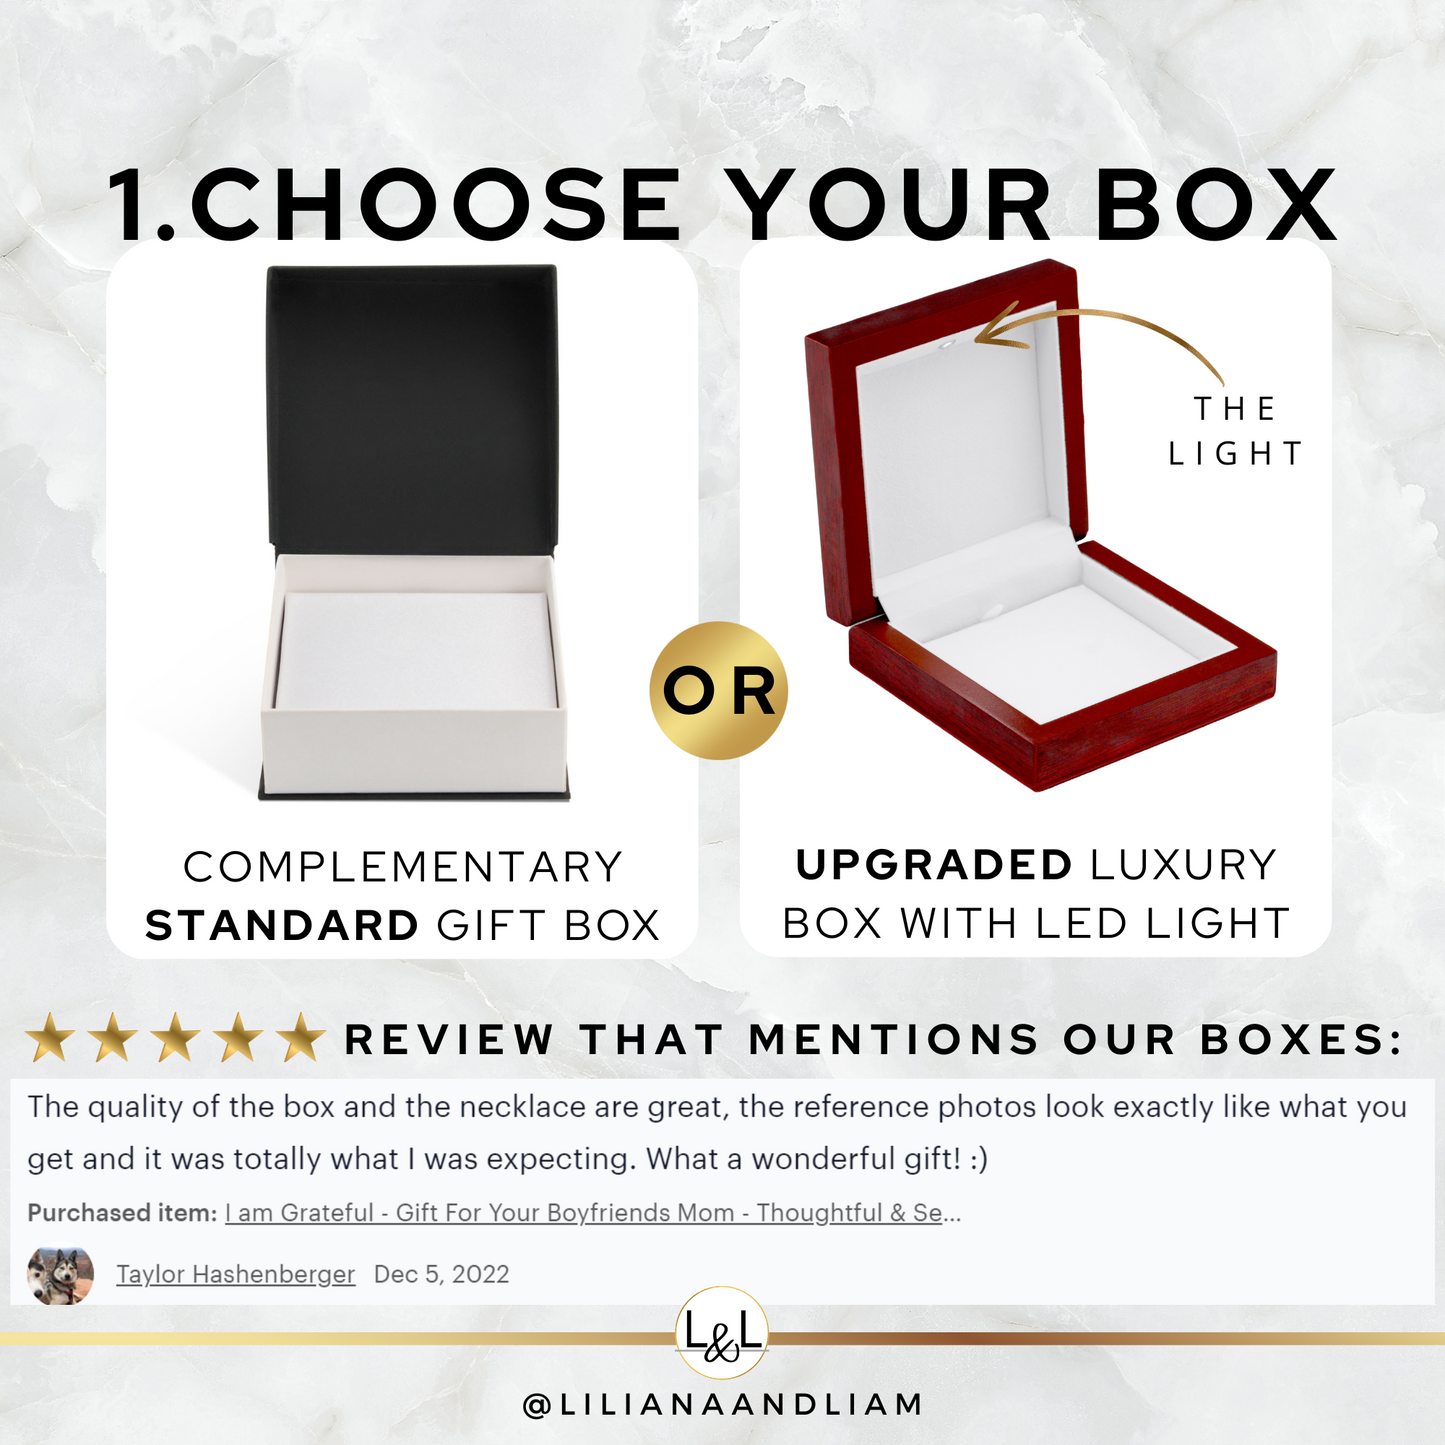 Luxury Box w/LED Light - After Purchase Box Upgrade